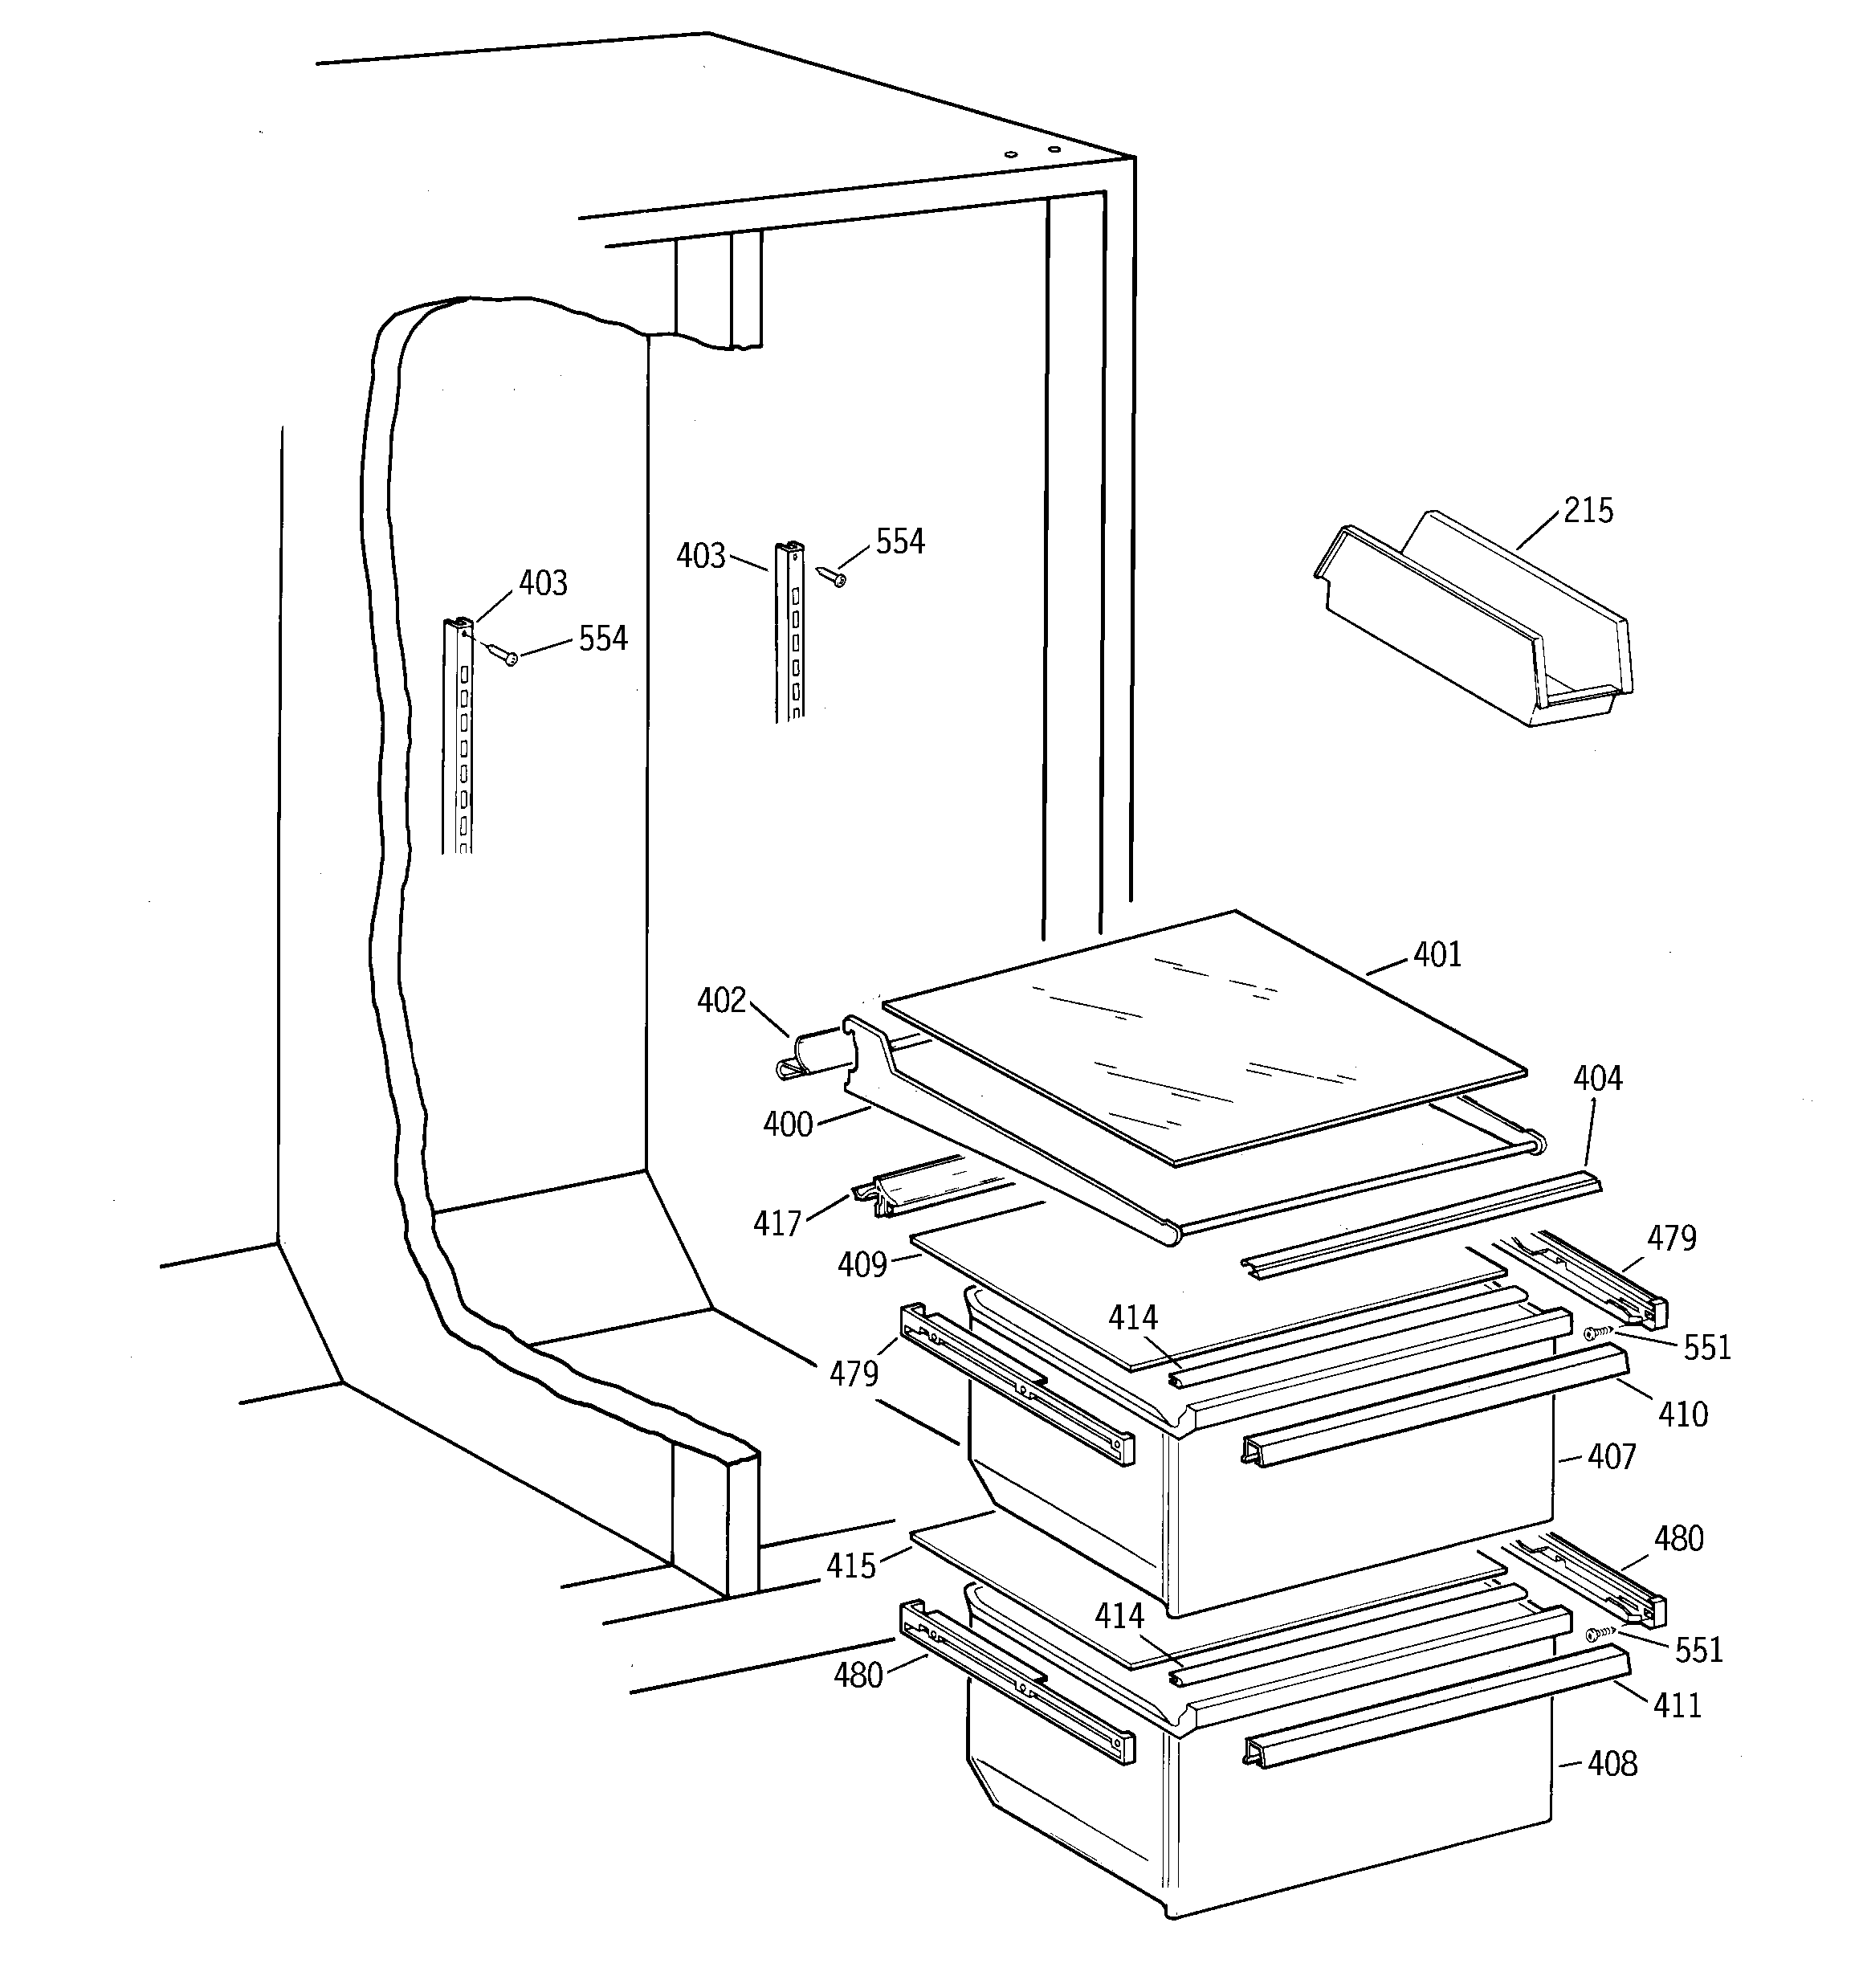 Sears Kenmore Refrigerator Model 363 Manual